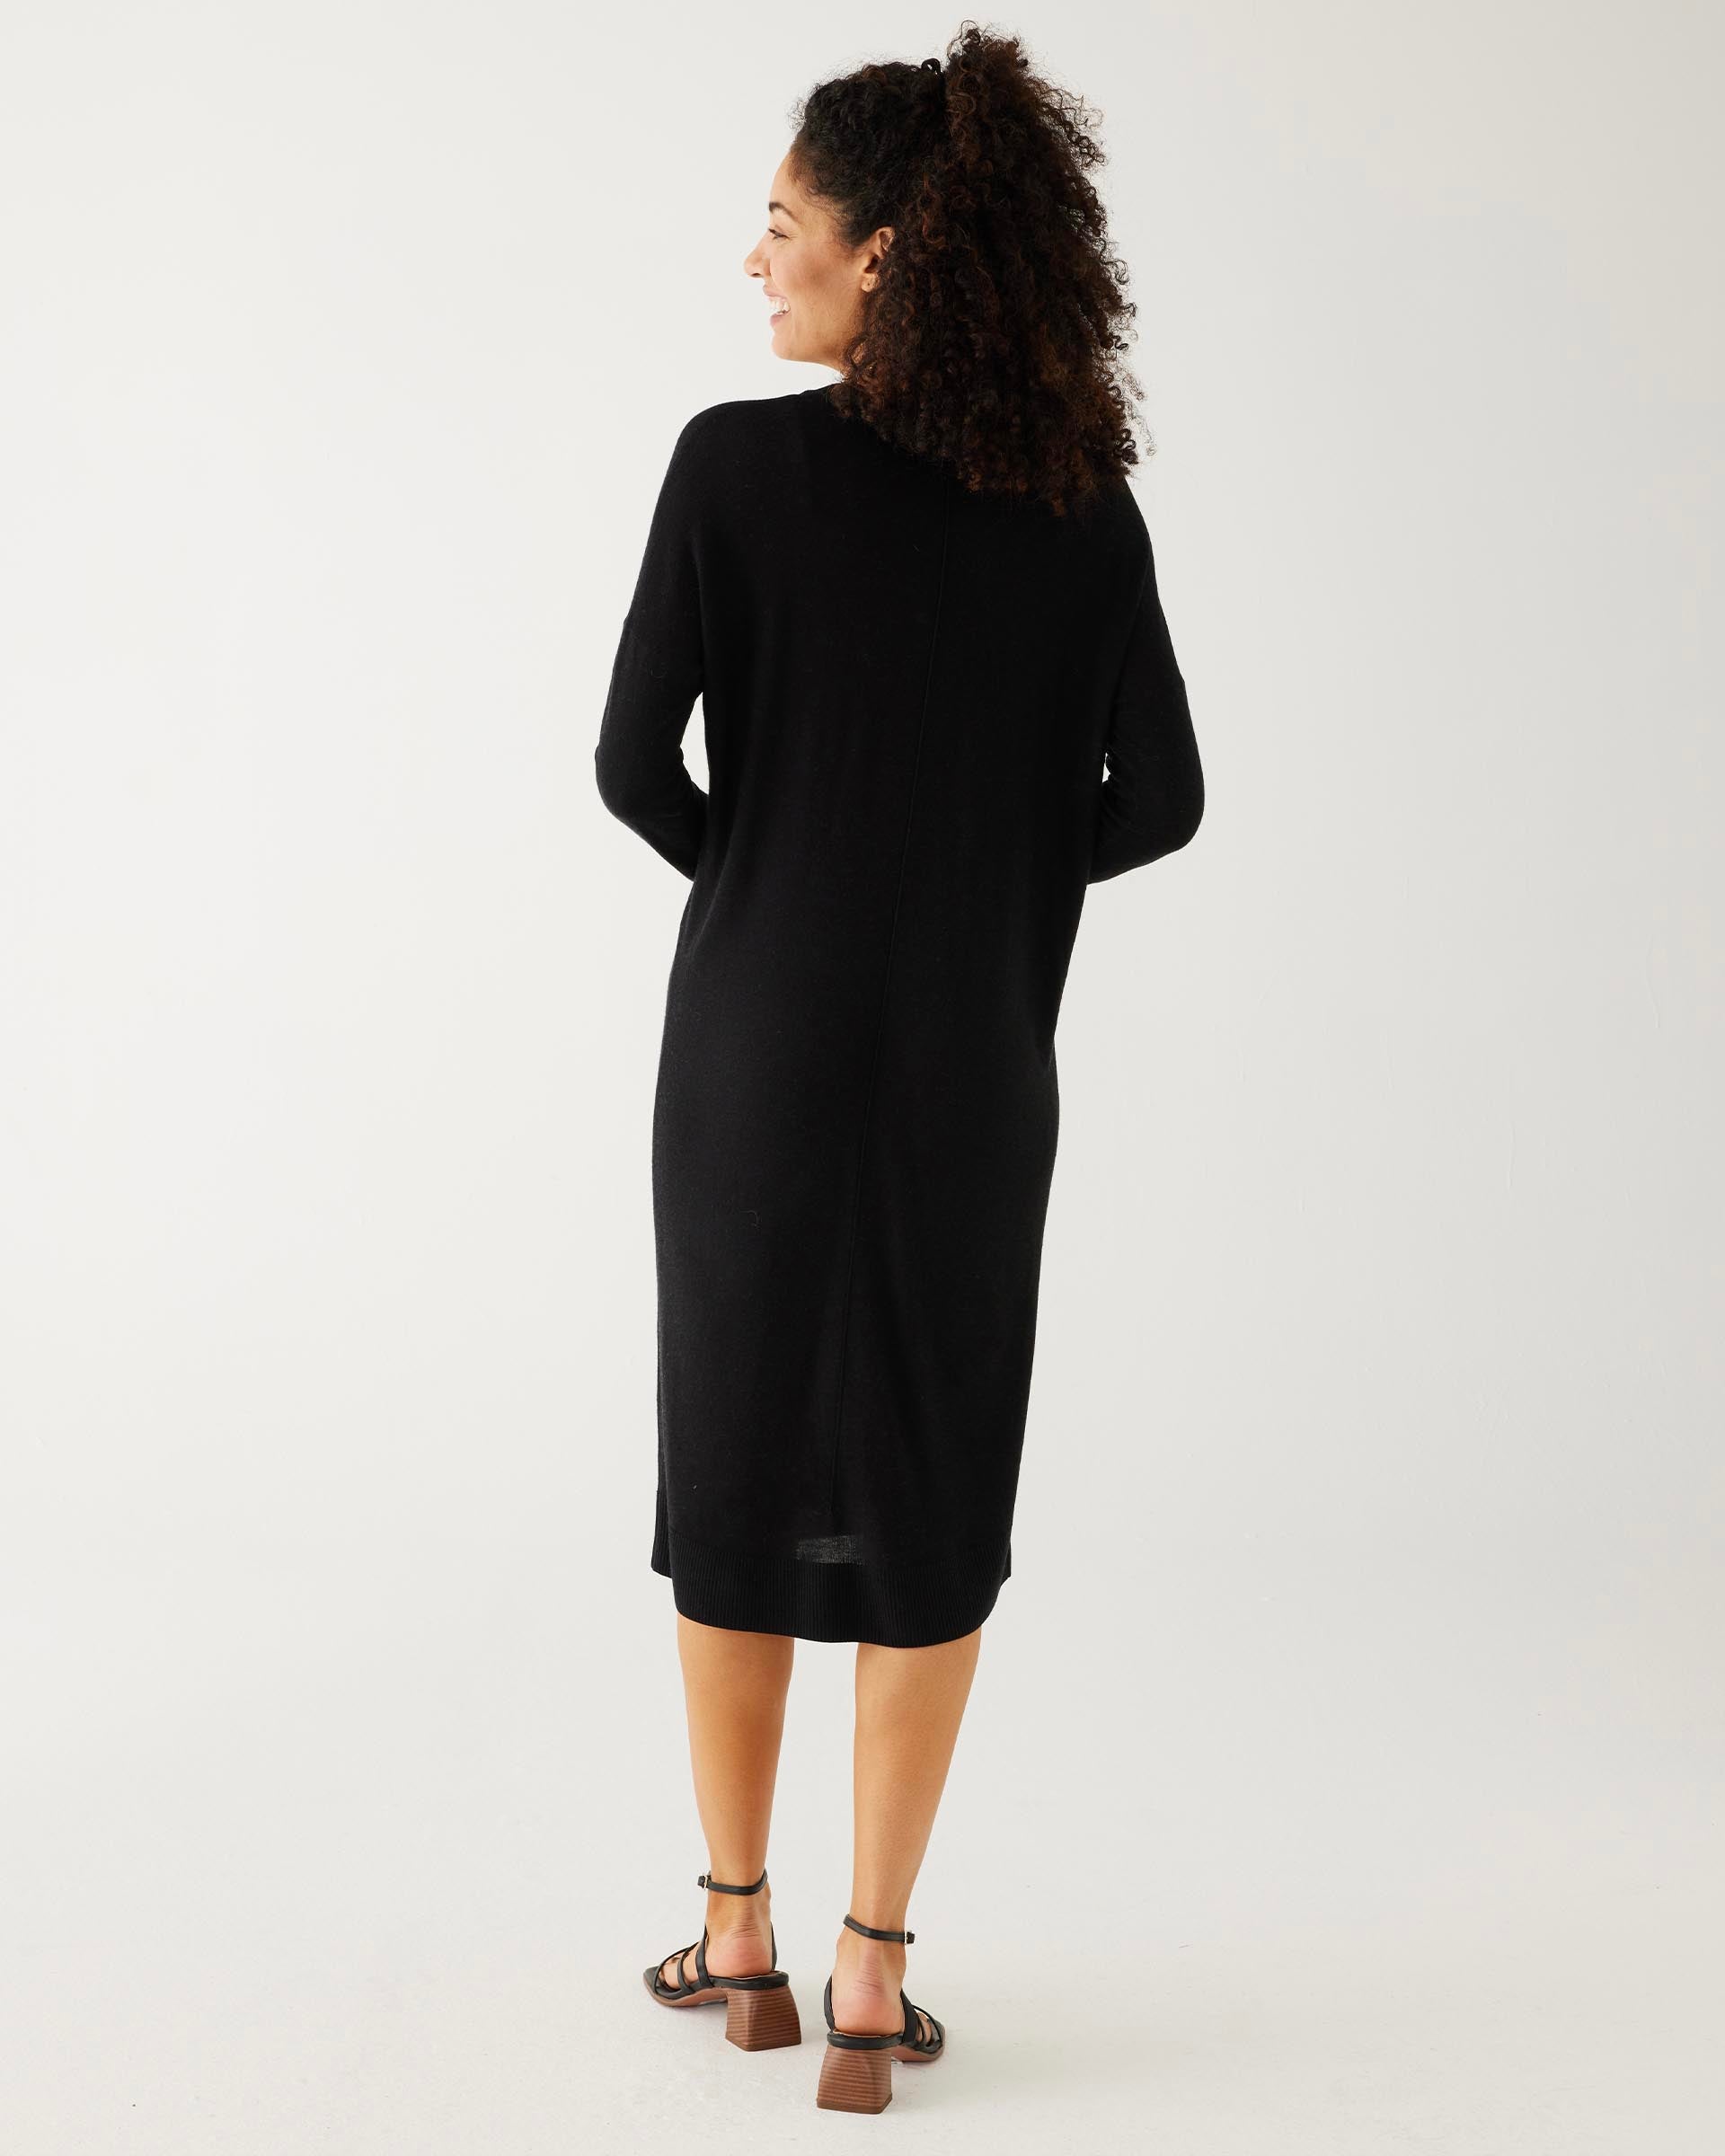 rearview of woman showcasing mersea black long sleeve v neck saltwash sweater dress